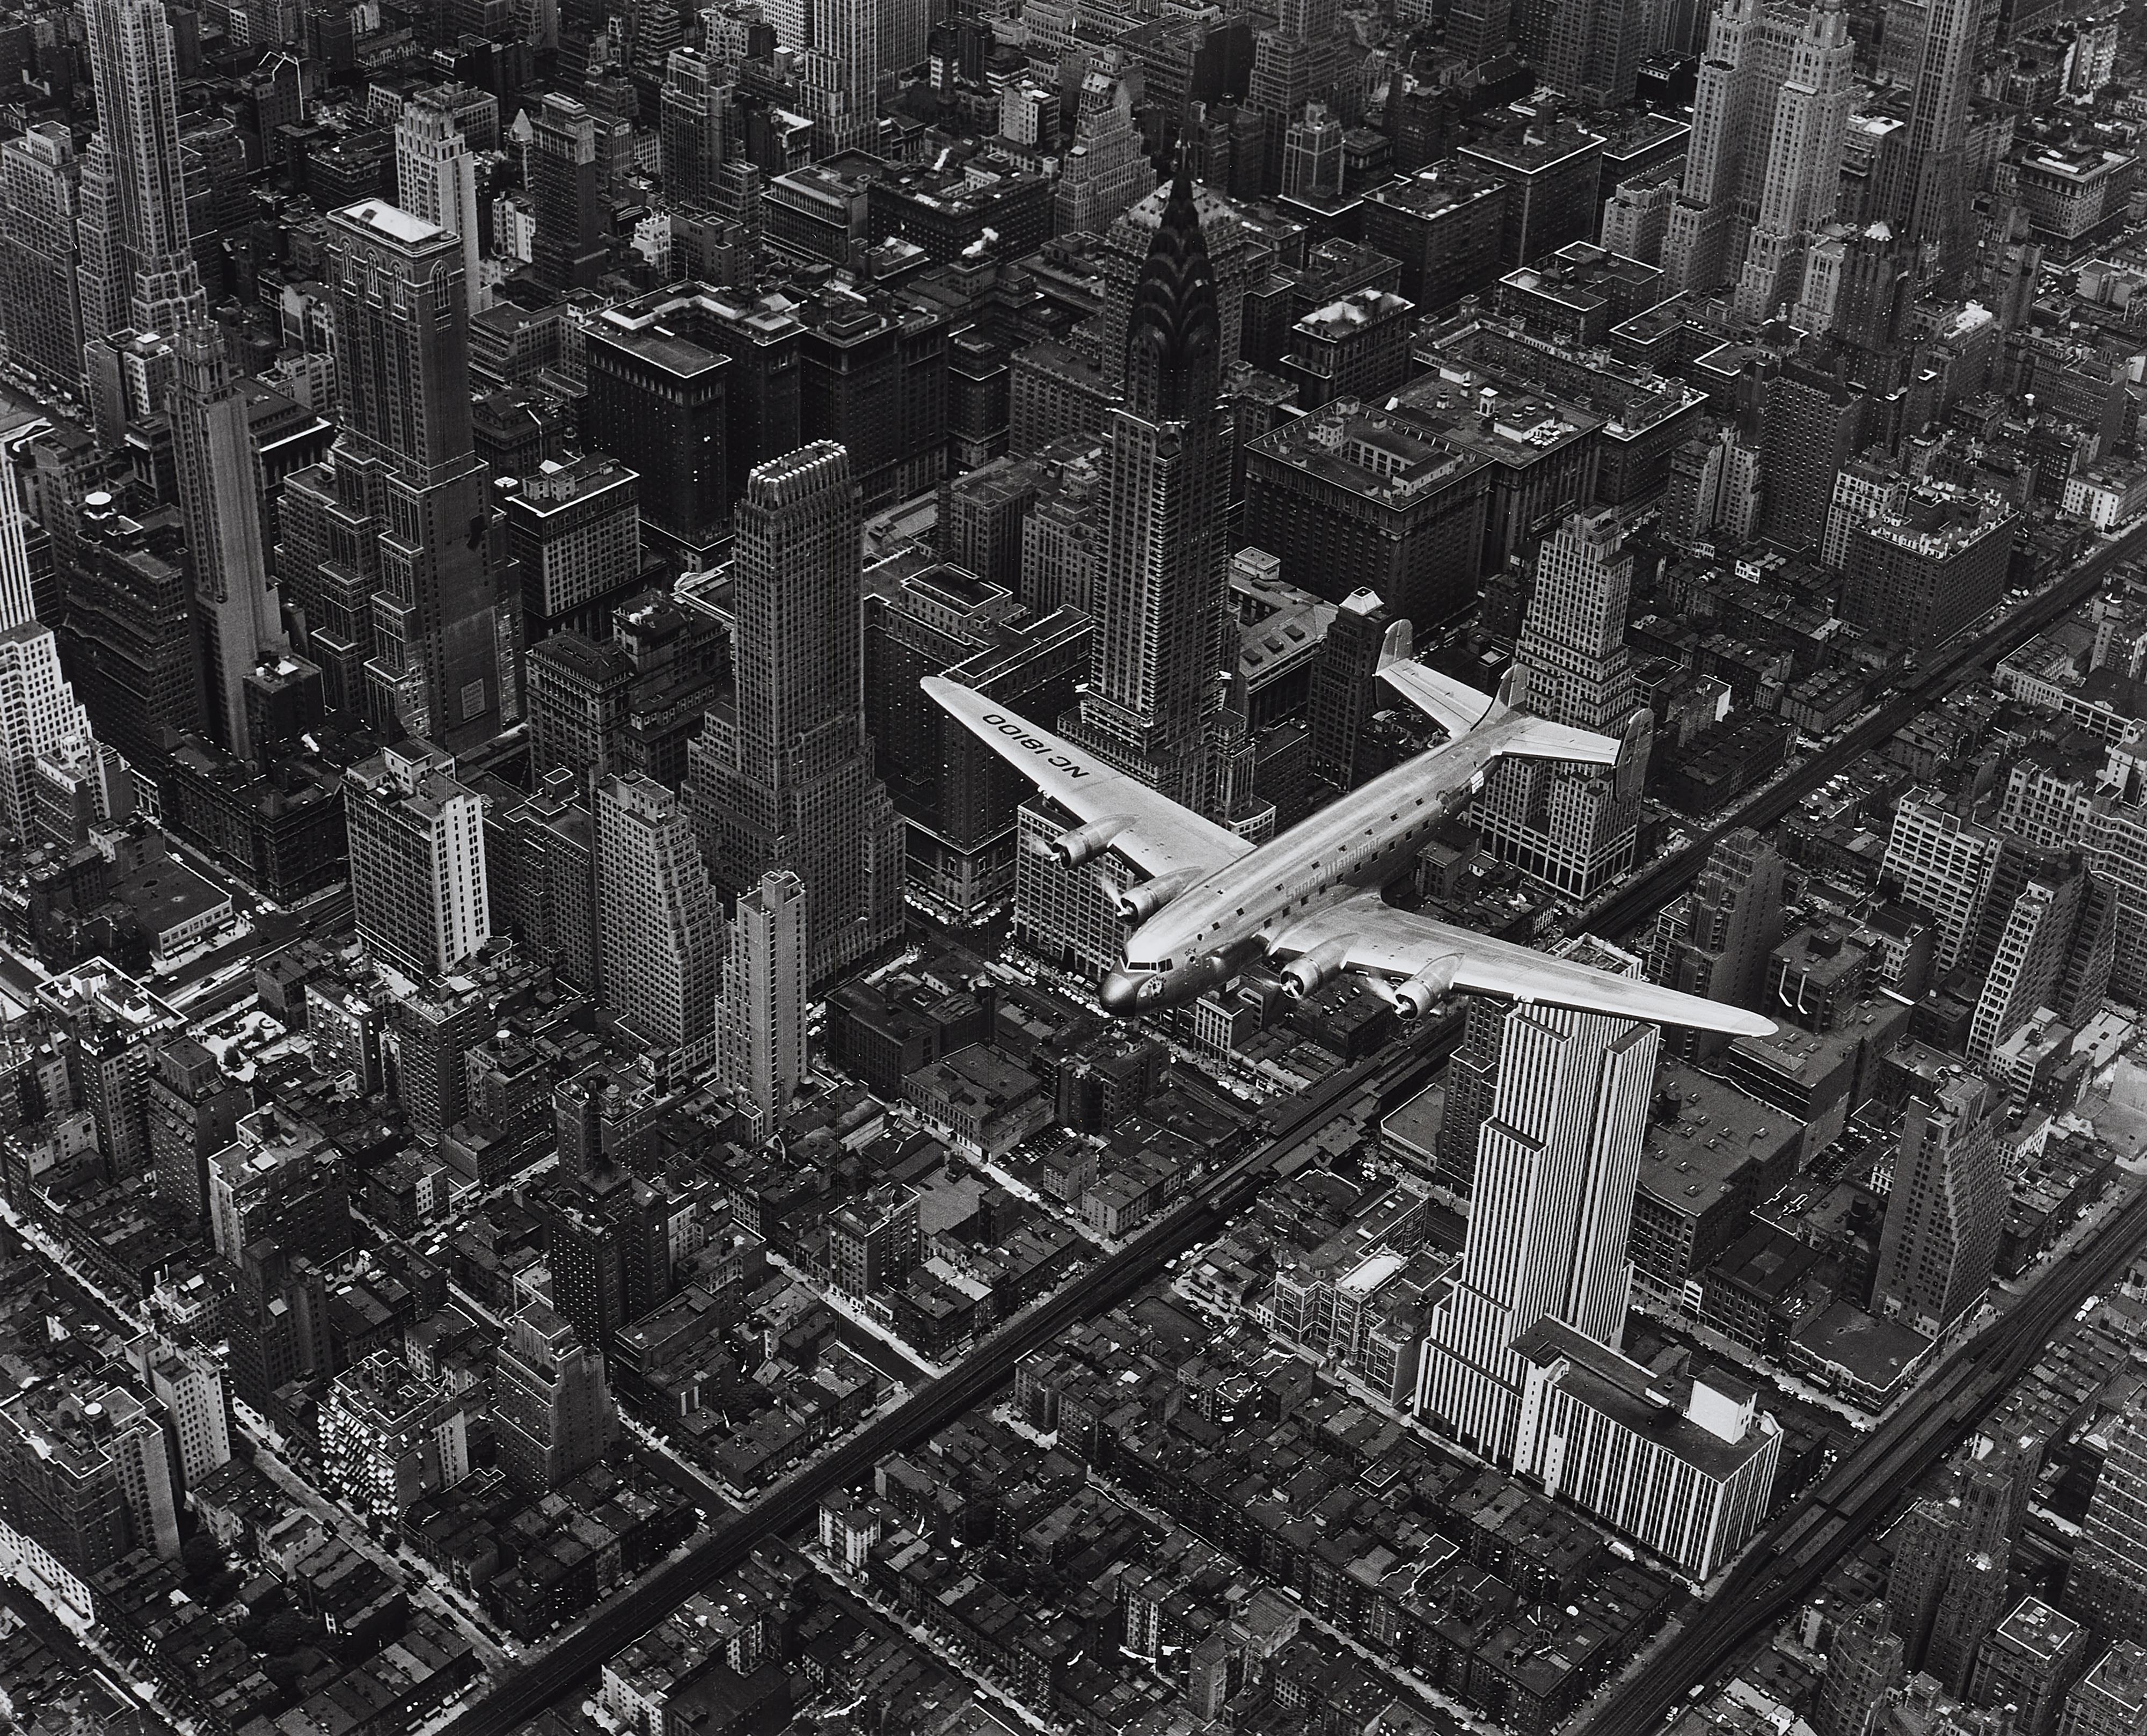 Margaret Bourke-White - A DC4 flying over New York City - image-1